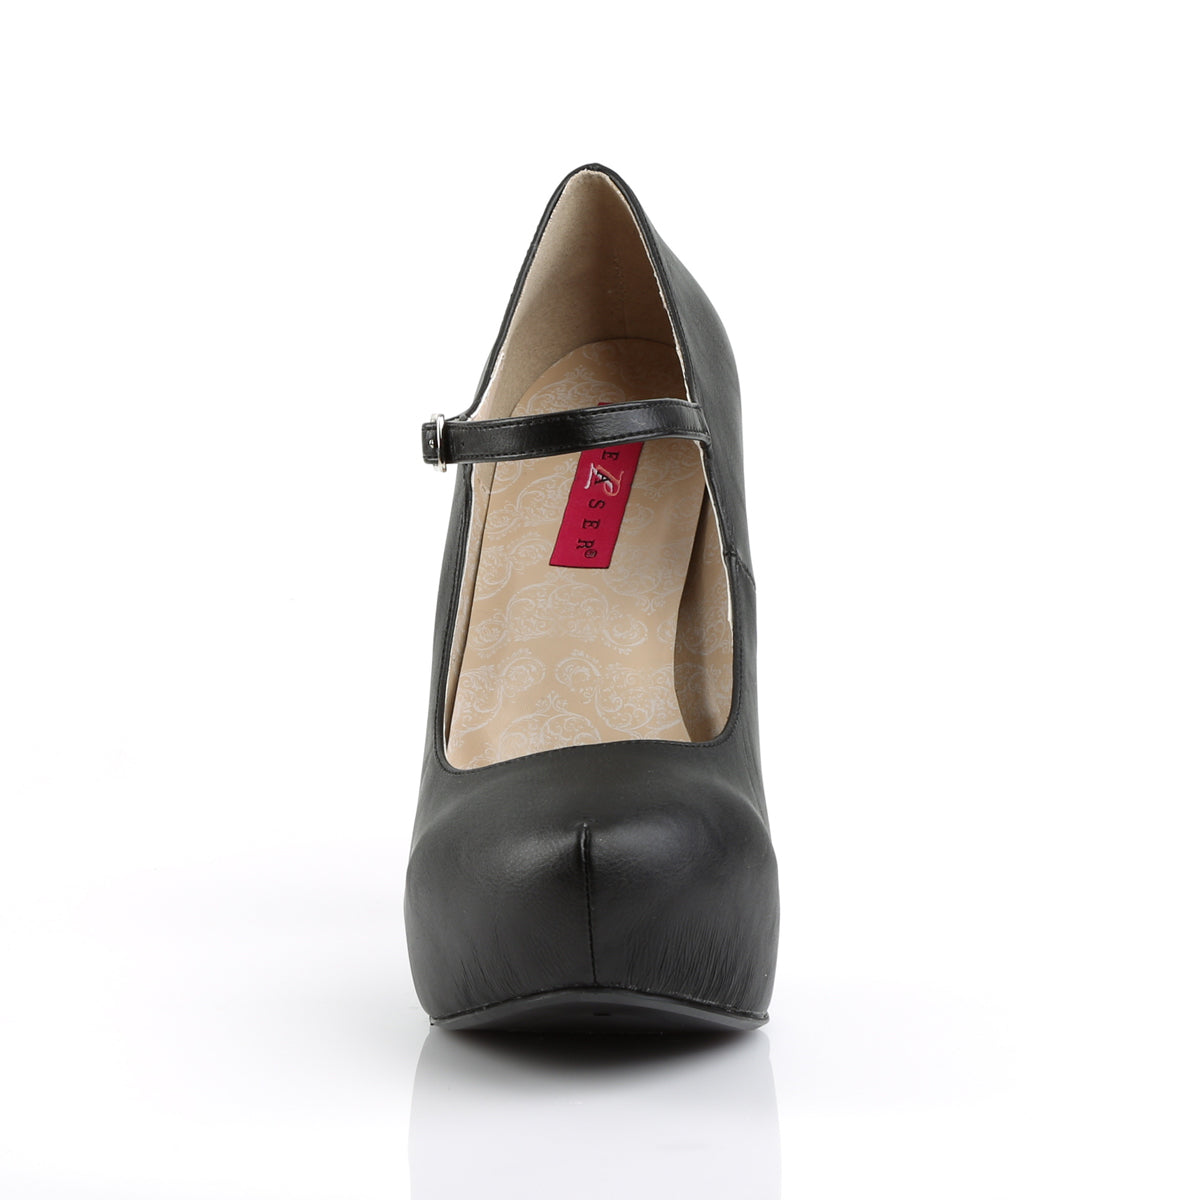 CHLOE-02 Large Size Ladies Heels with Pleaser Pink Label Platform Black Faux Leather